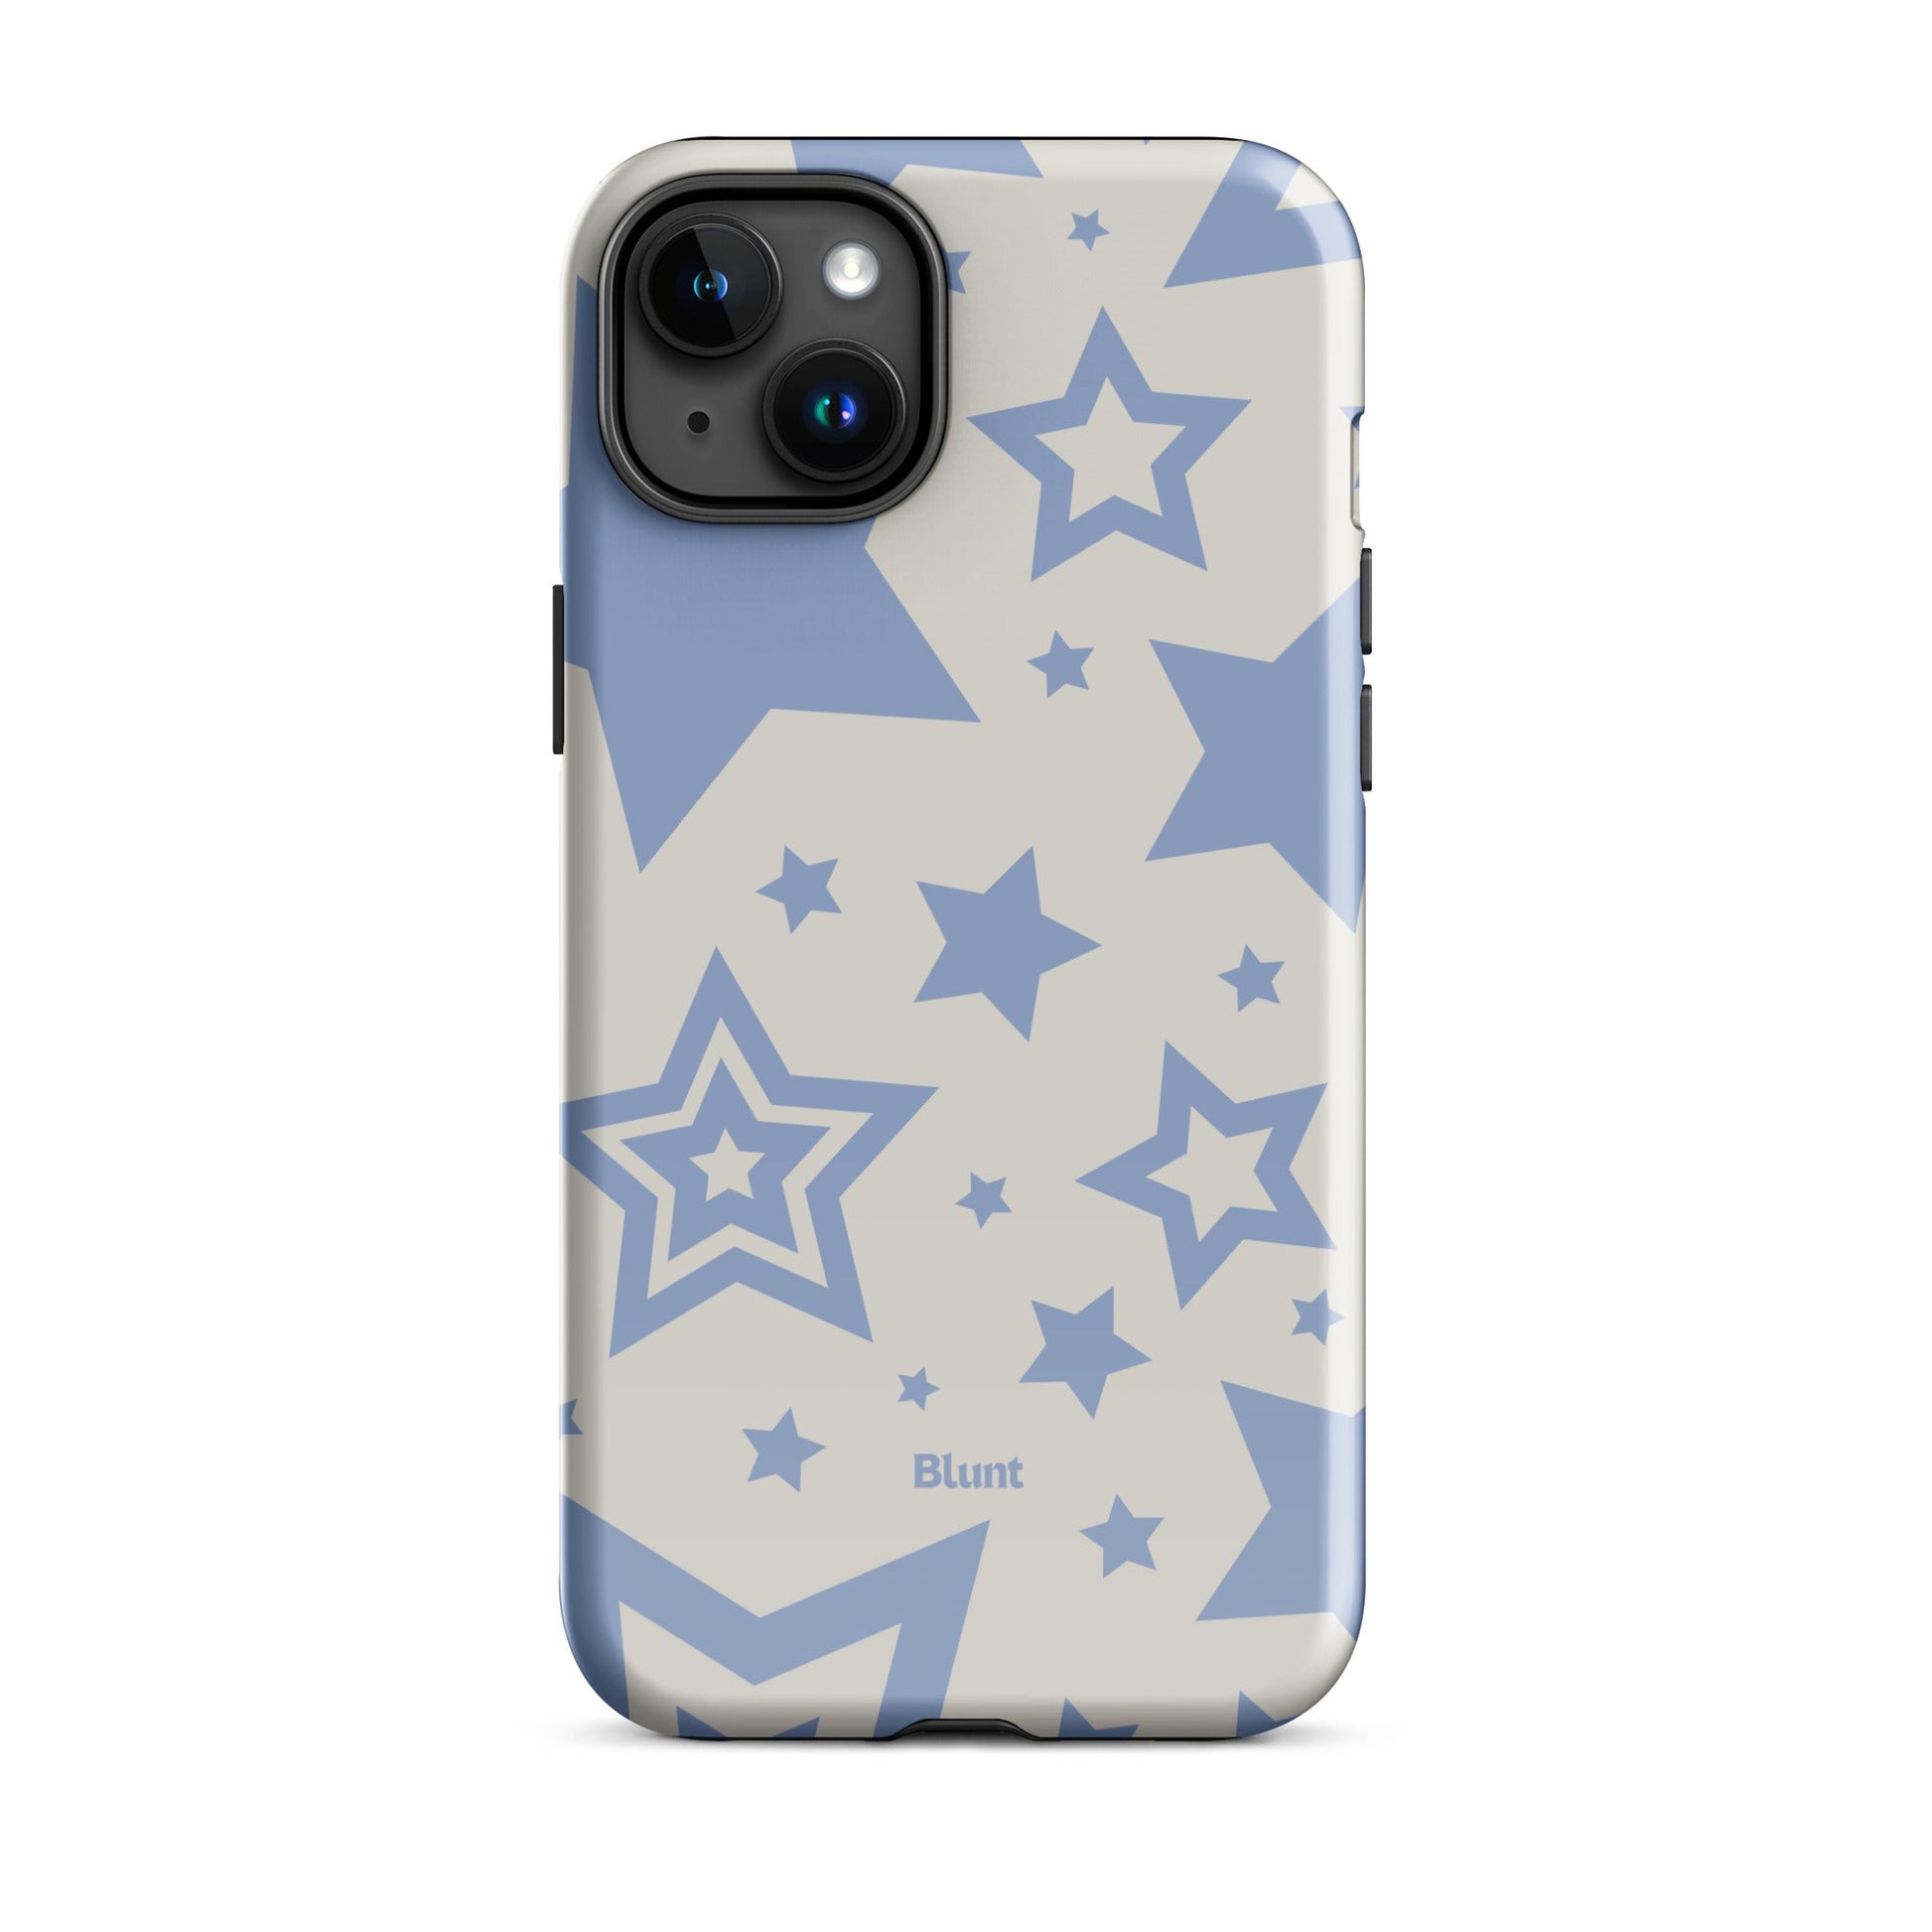 Ice Star iPhone Case - blunt cases